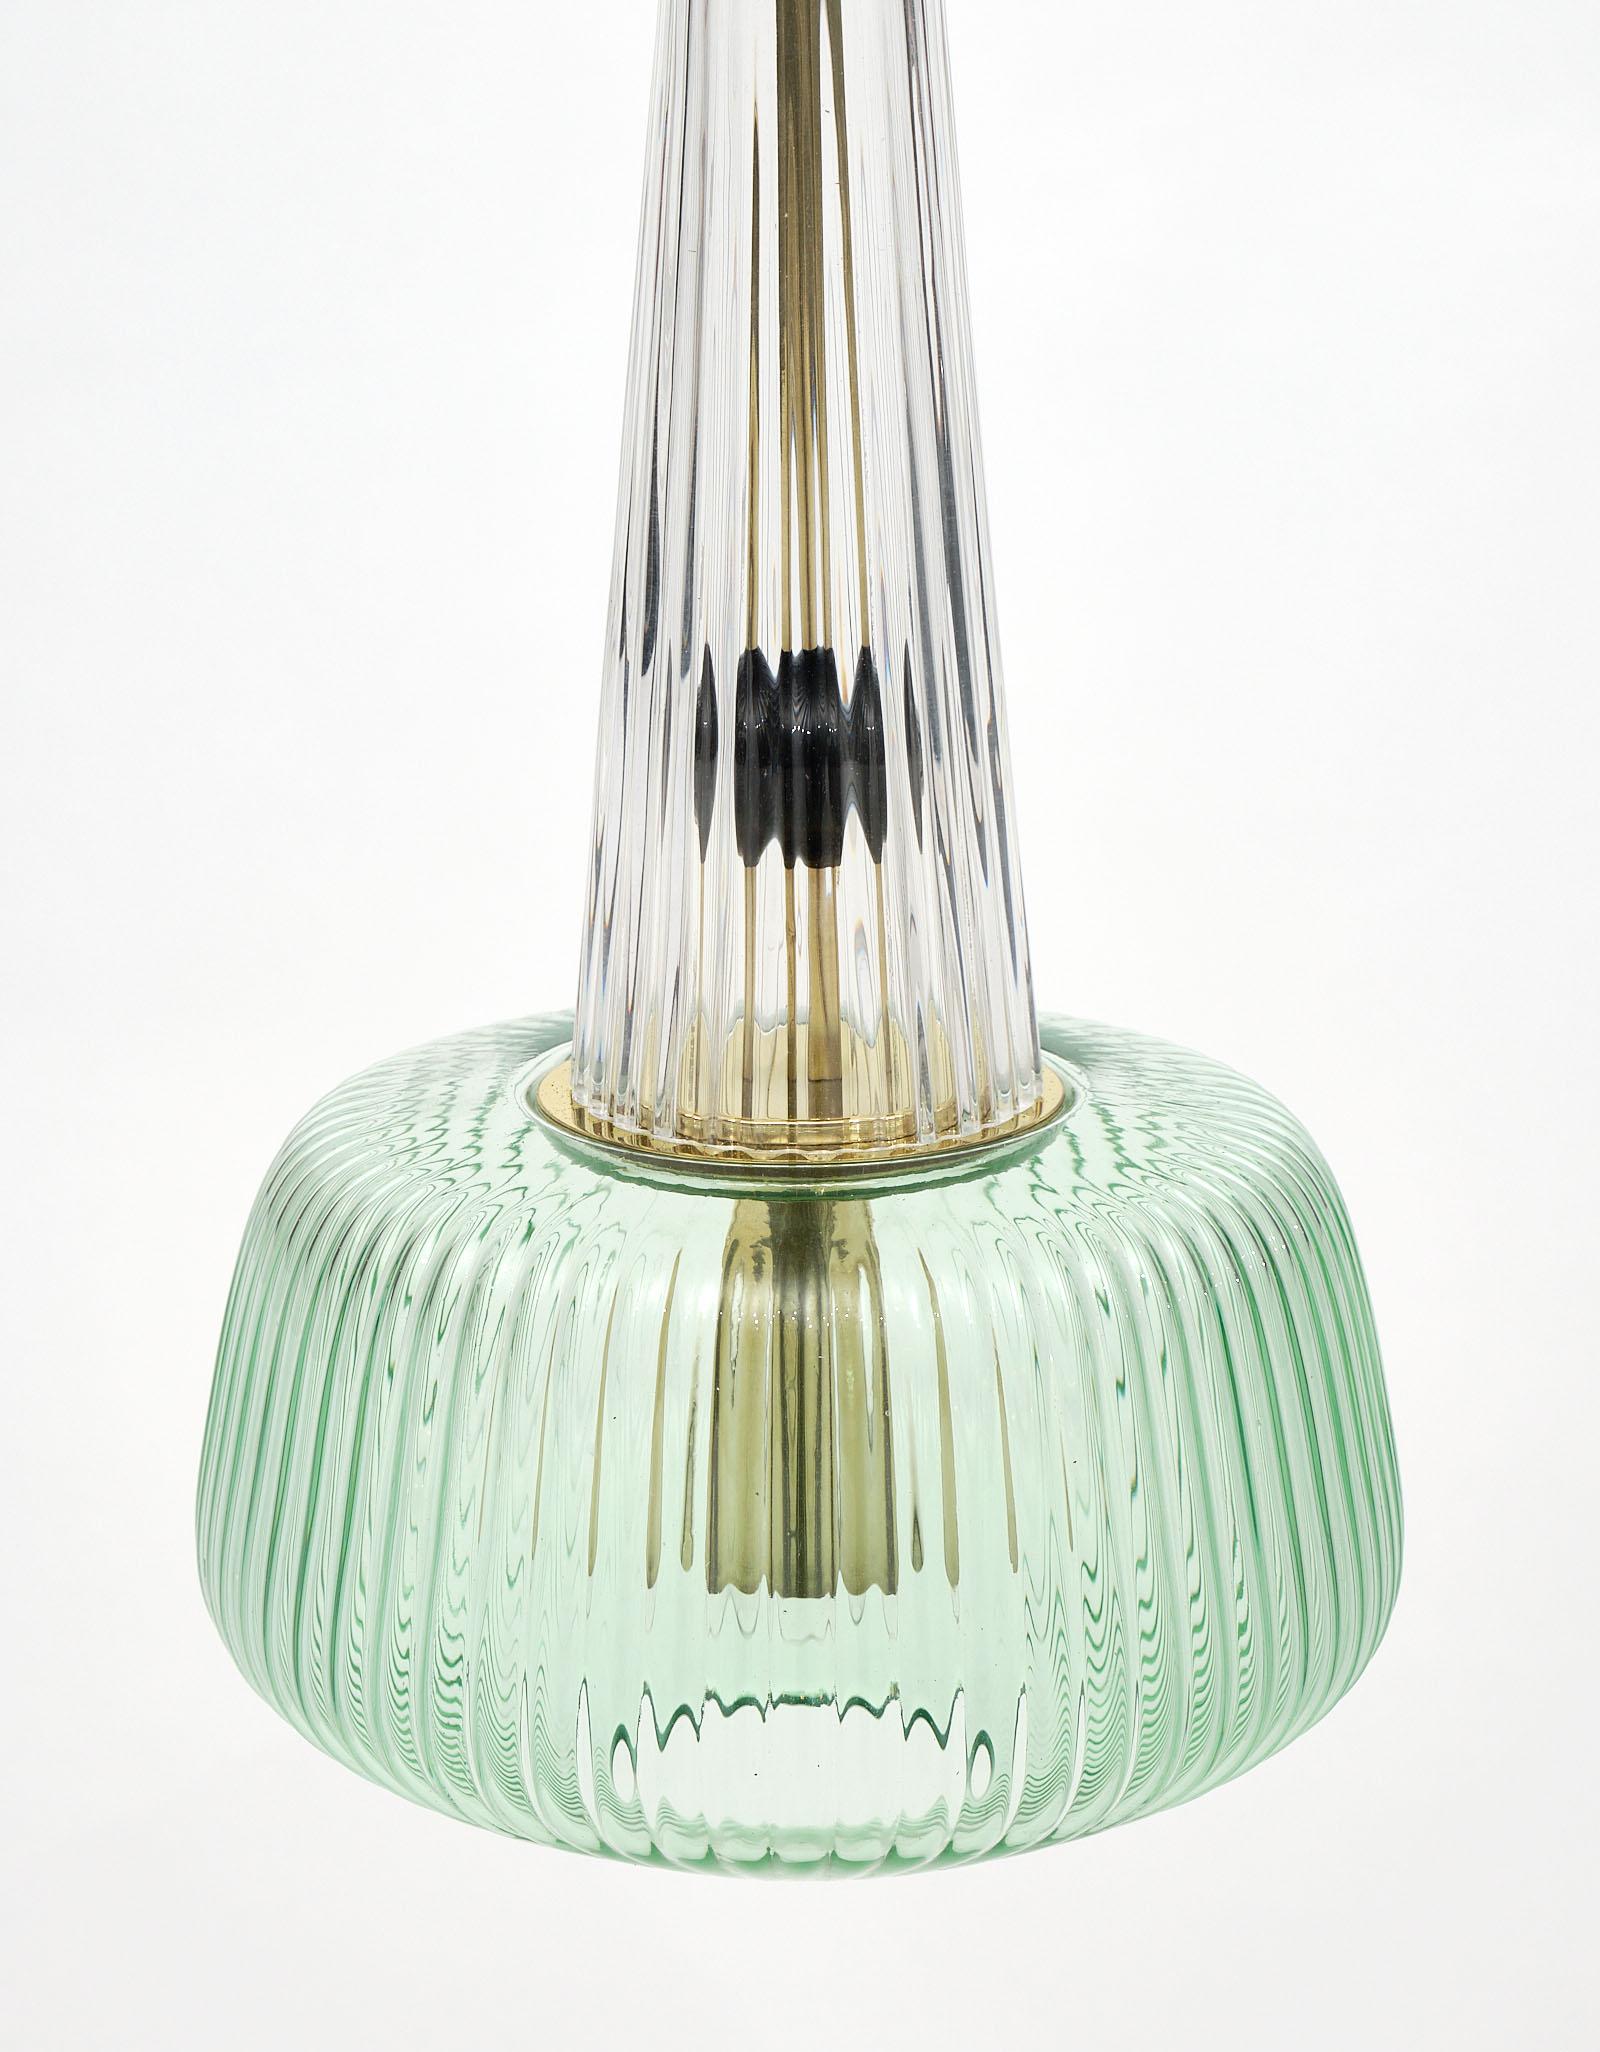 Italian Set of Murano Glass Ridged Pendants in the Style of Ettore Sottsass